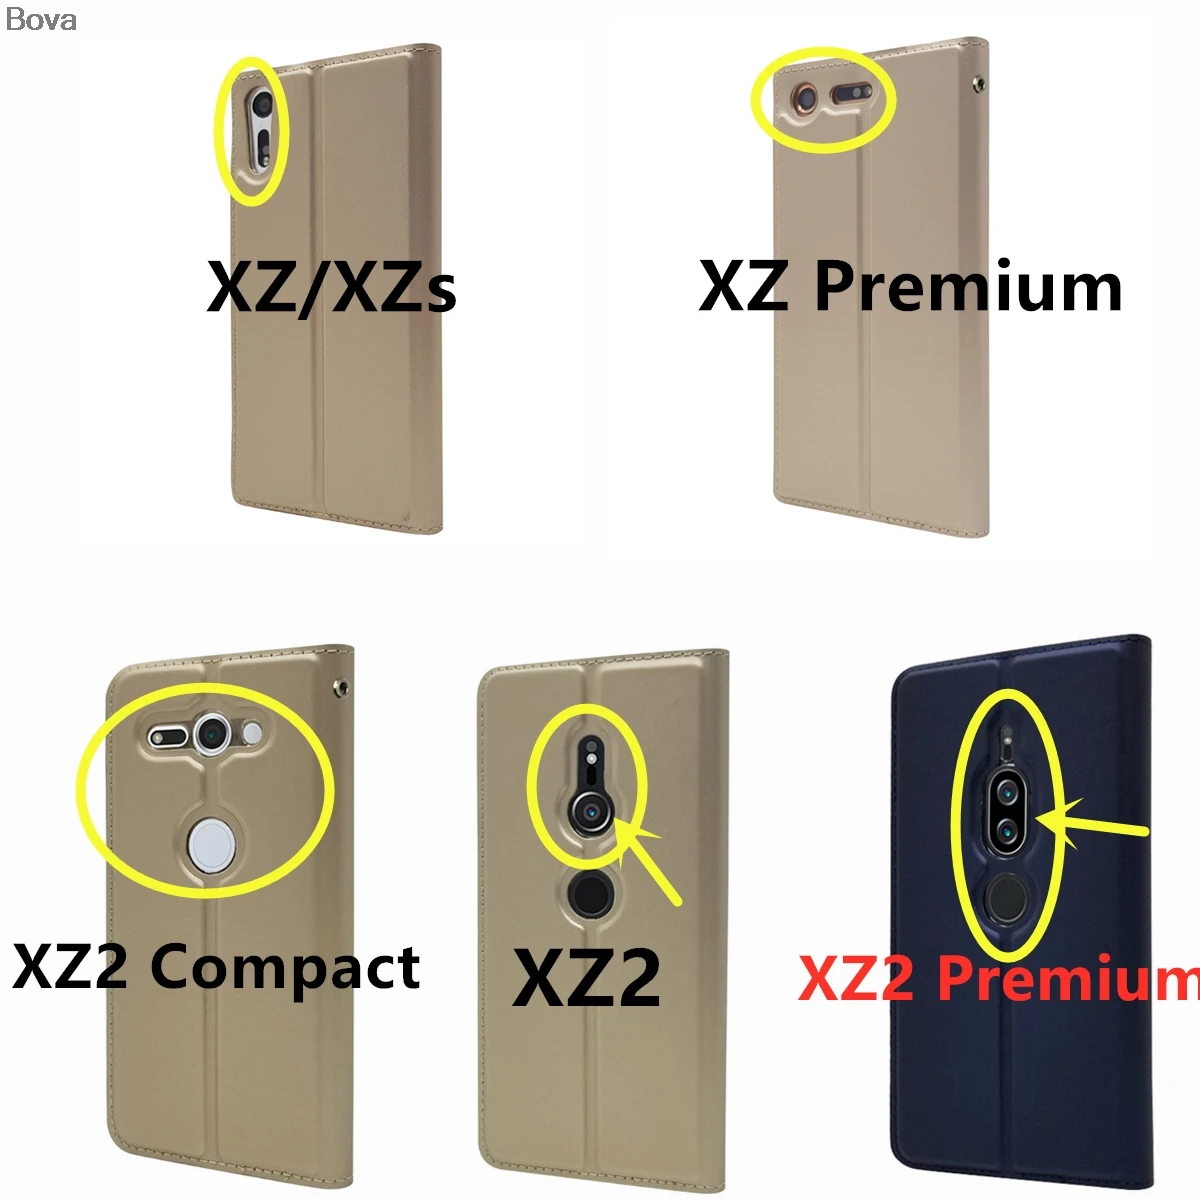 Caso de cartera para Sony Xperia XZ2 Compacto XZ 2 Premium a prueba de caídas veces la caja del Teléfono atracción Magnética Ultra-delgada Mate Toque 3